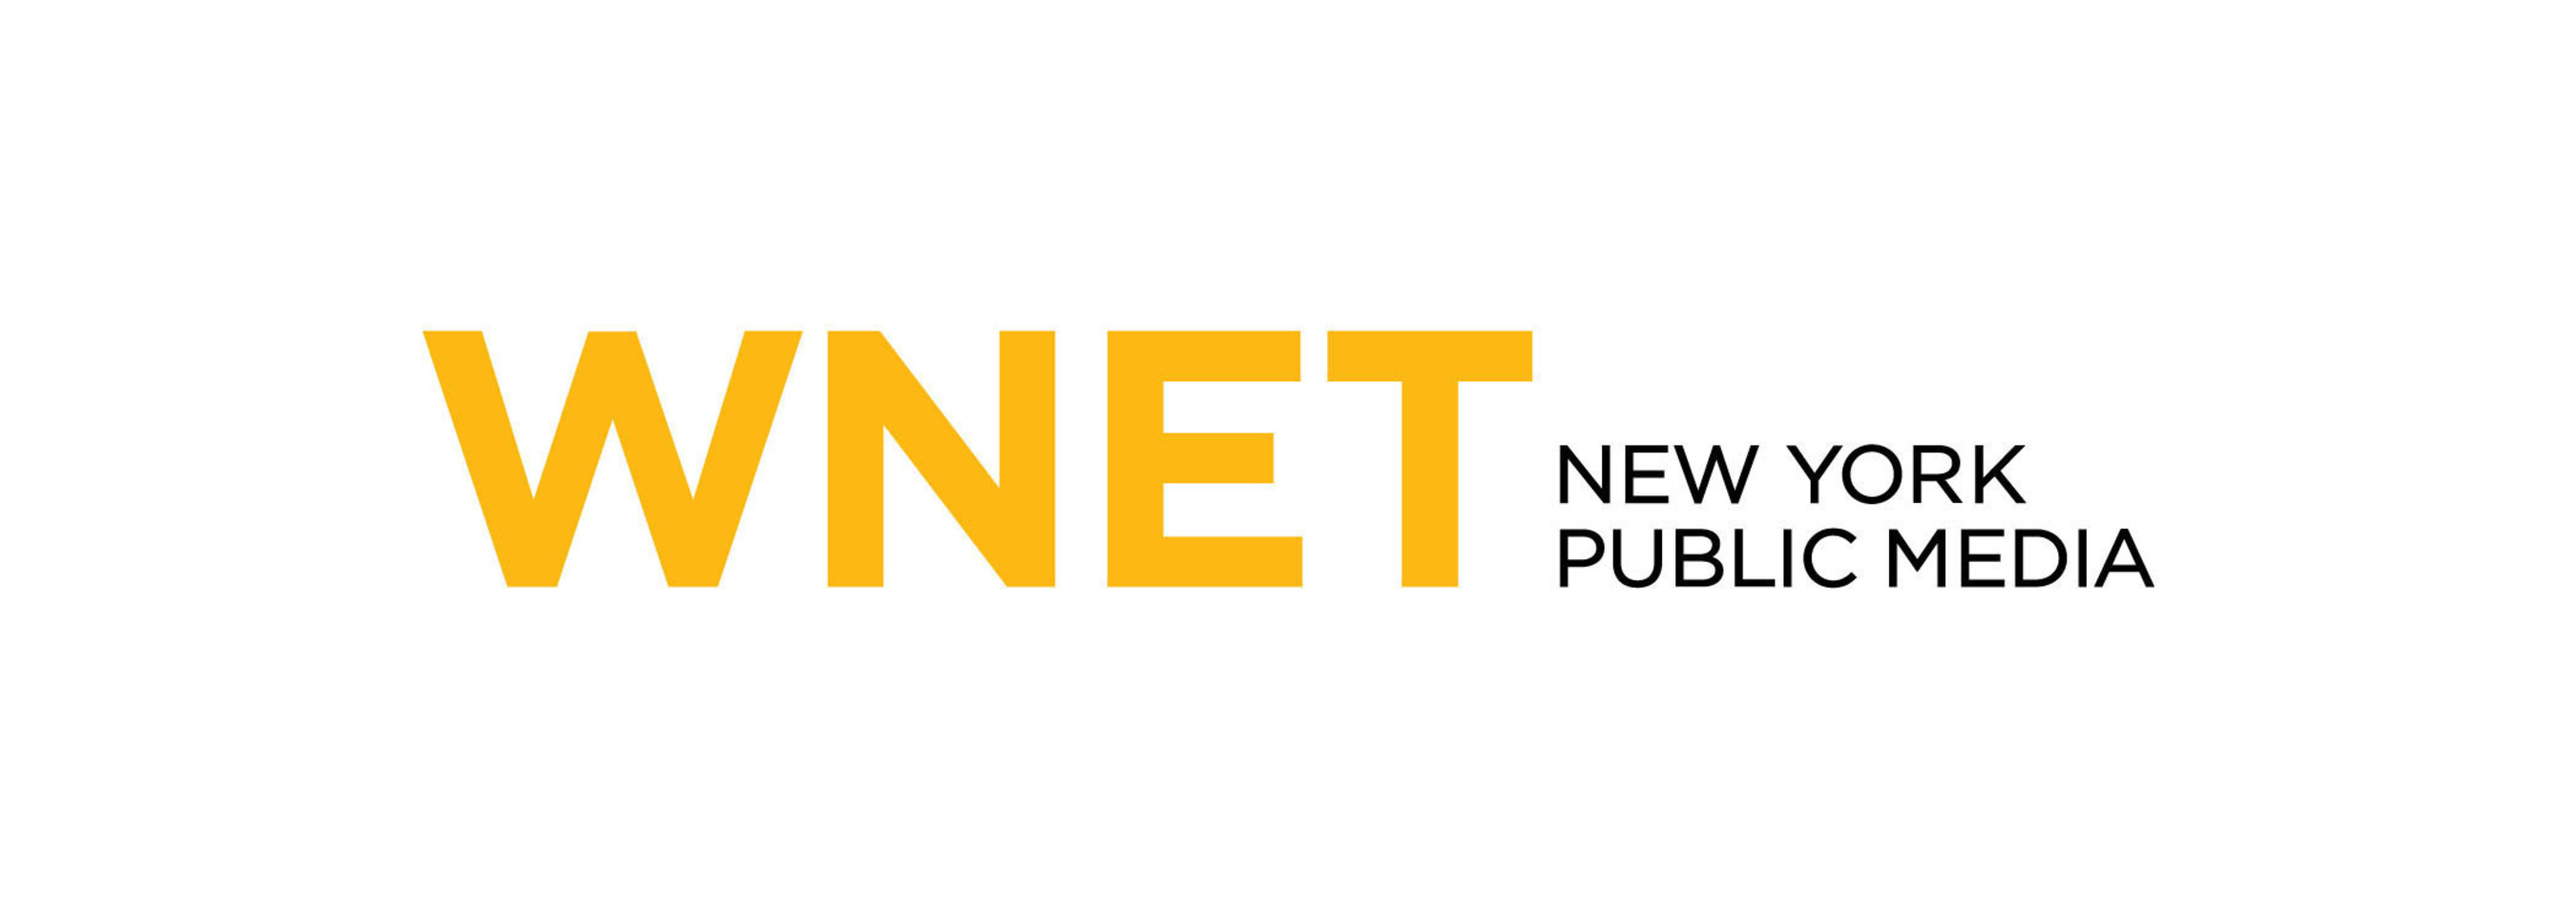 WNET is New York's flagship PBS station. (PRNewsFoto/WNET)